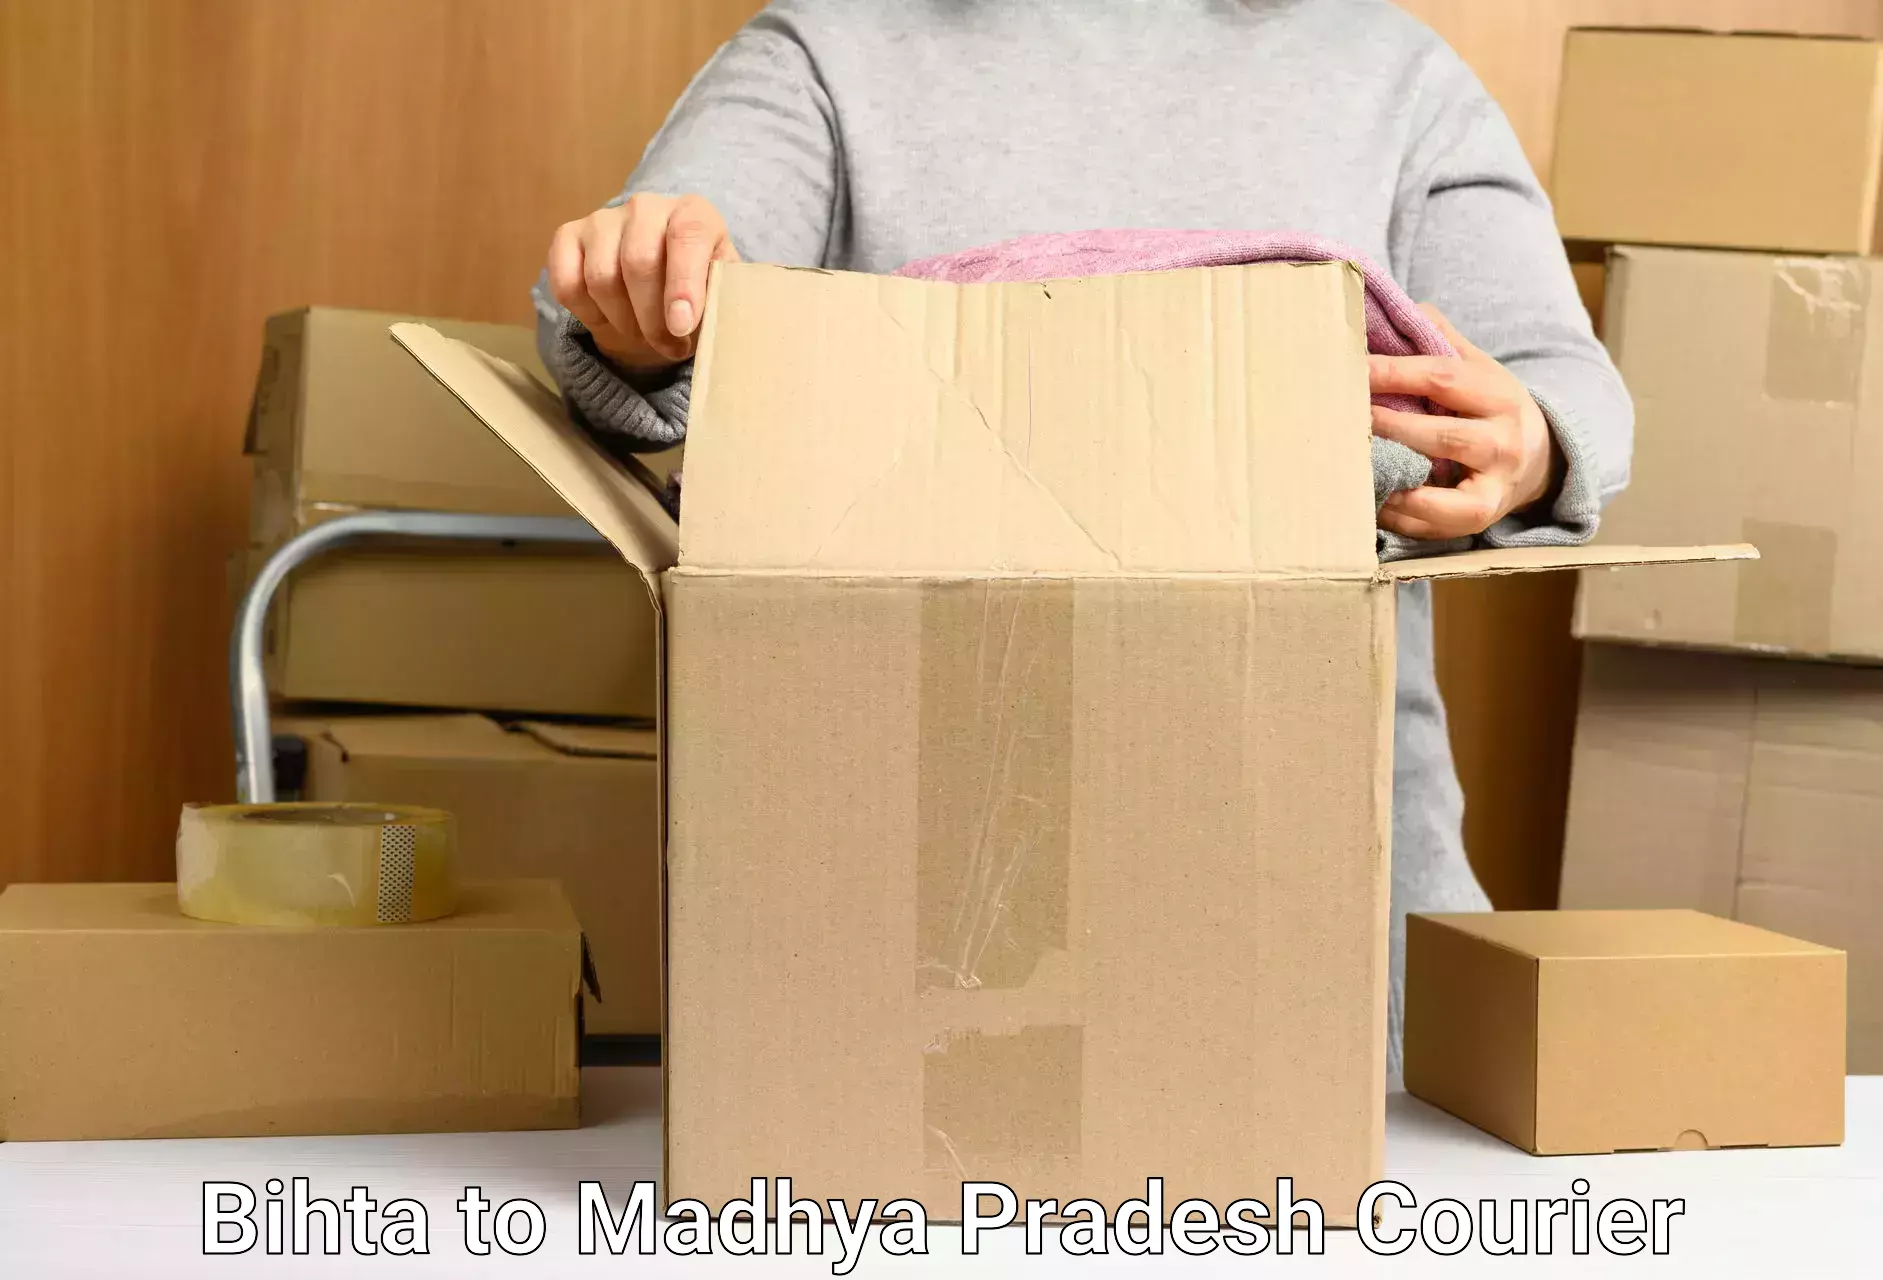 Multi-service courier options Bihta to Maheshwar